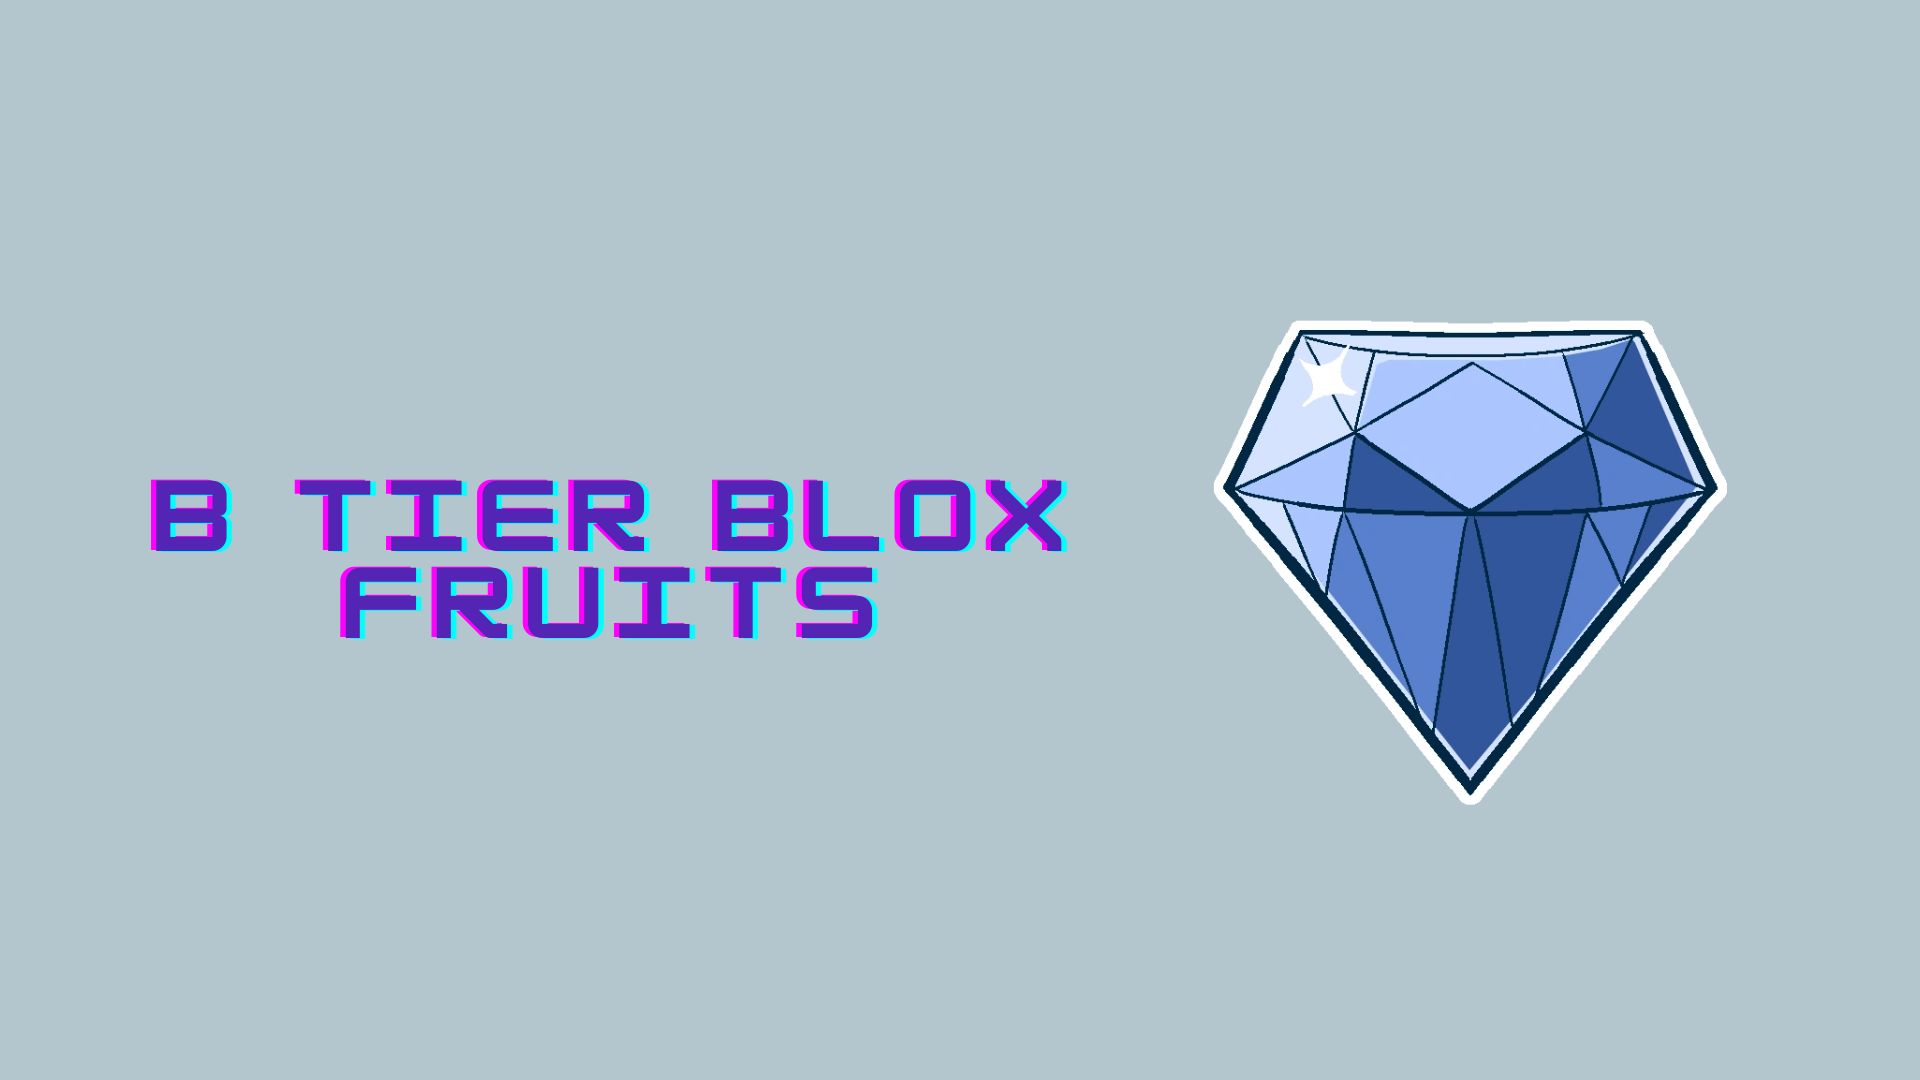 BLOX FRUITS